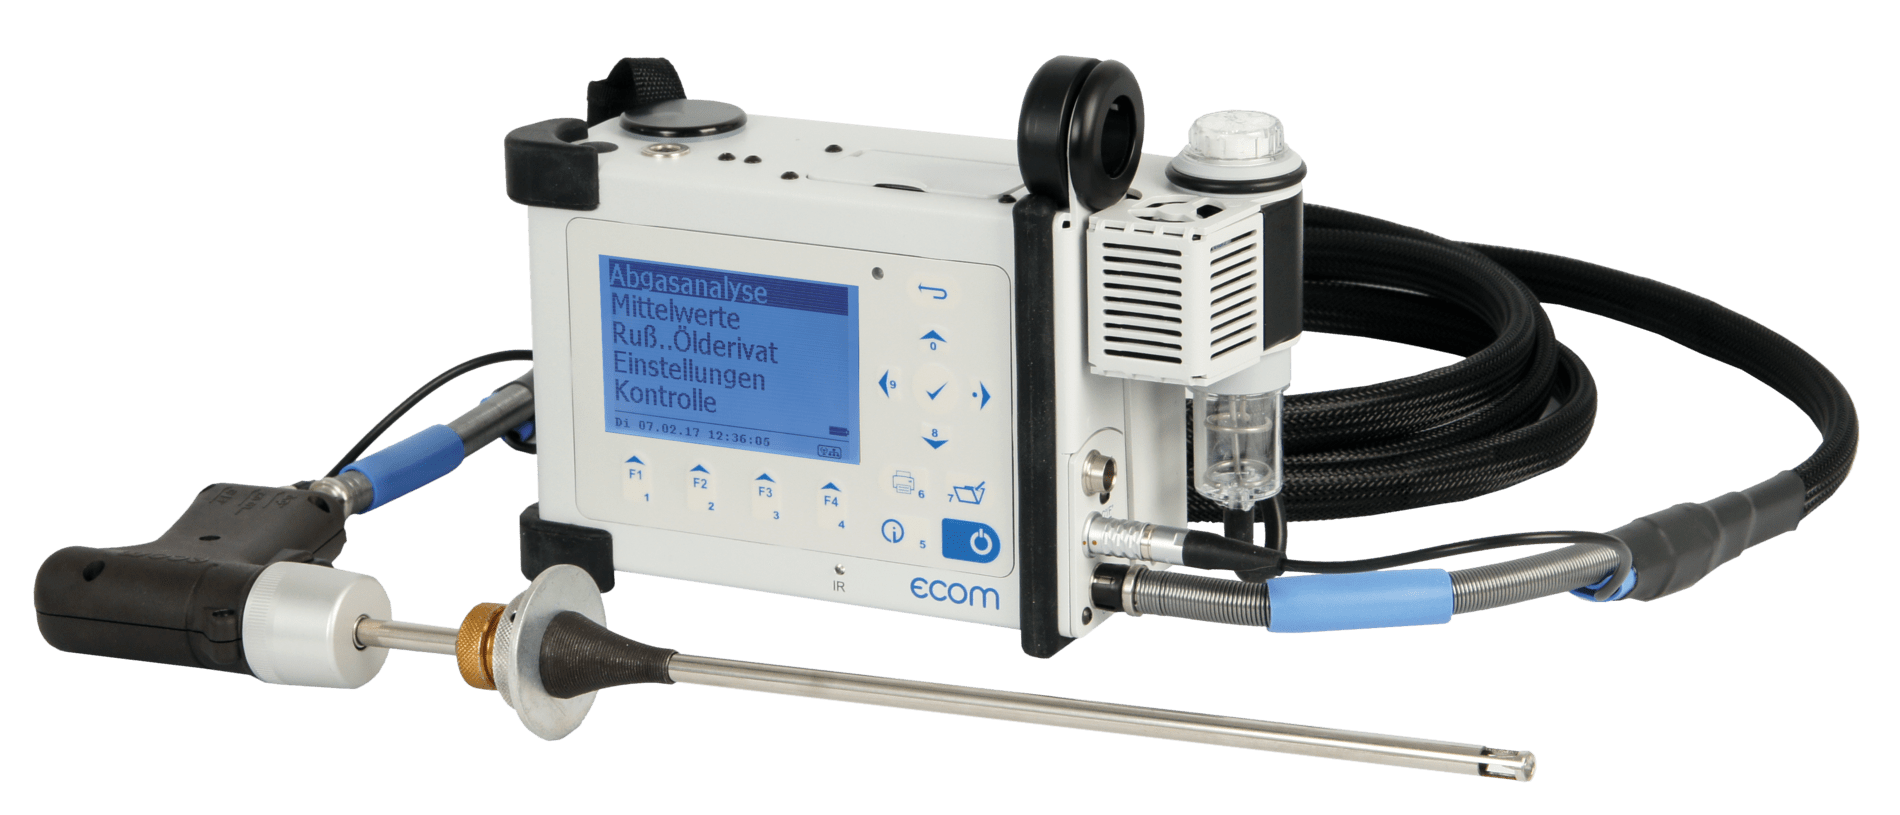 ecom-D - Abgasmessgerät für industrielle Anwendungen